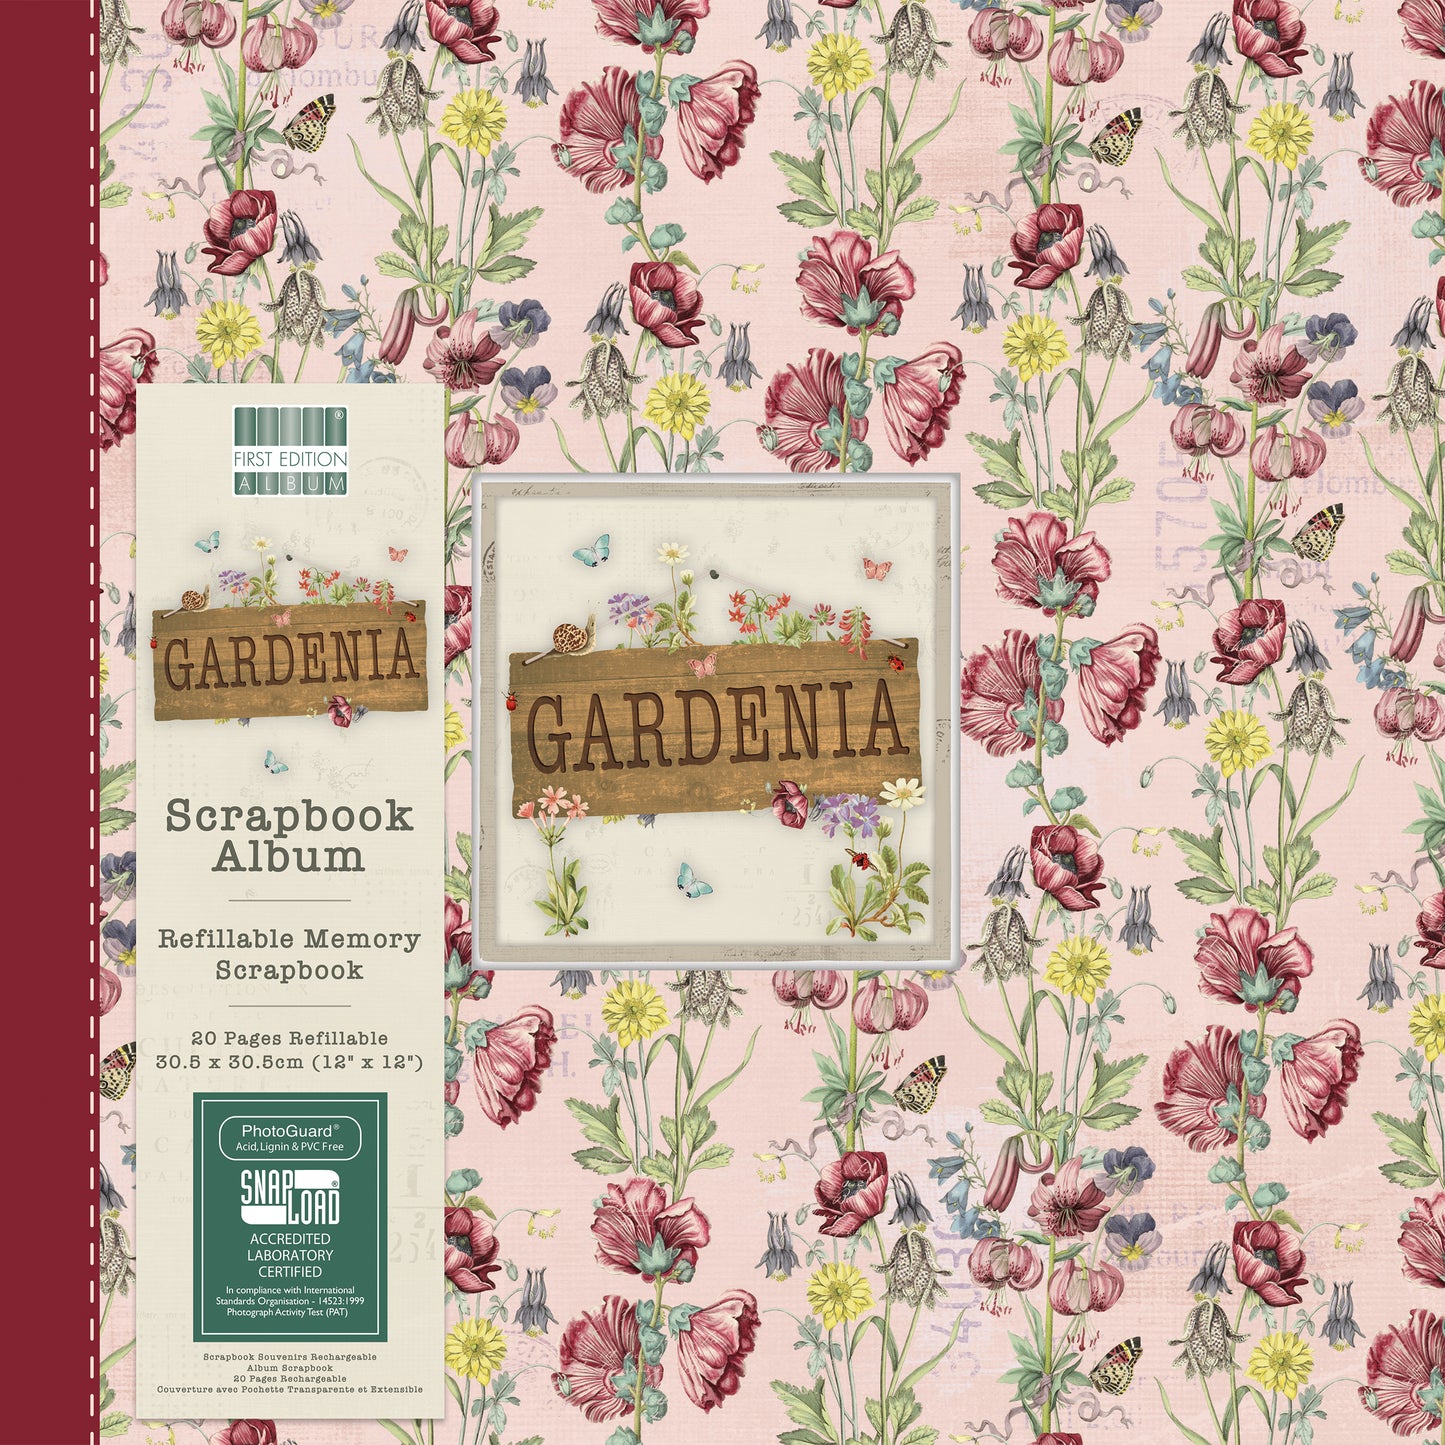 First Edition 12x12 Album - Gardenia Flowers